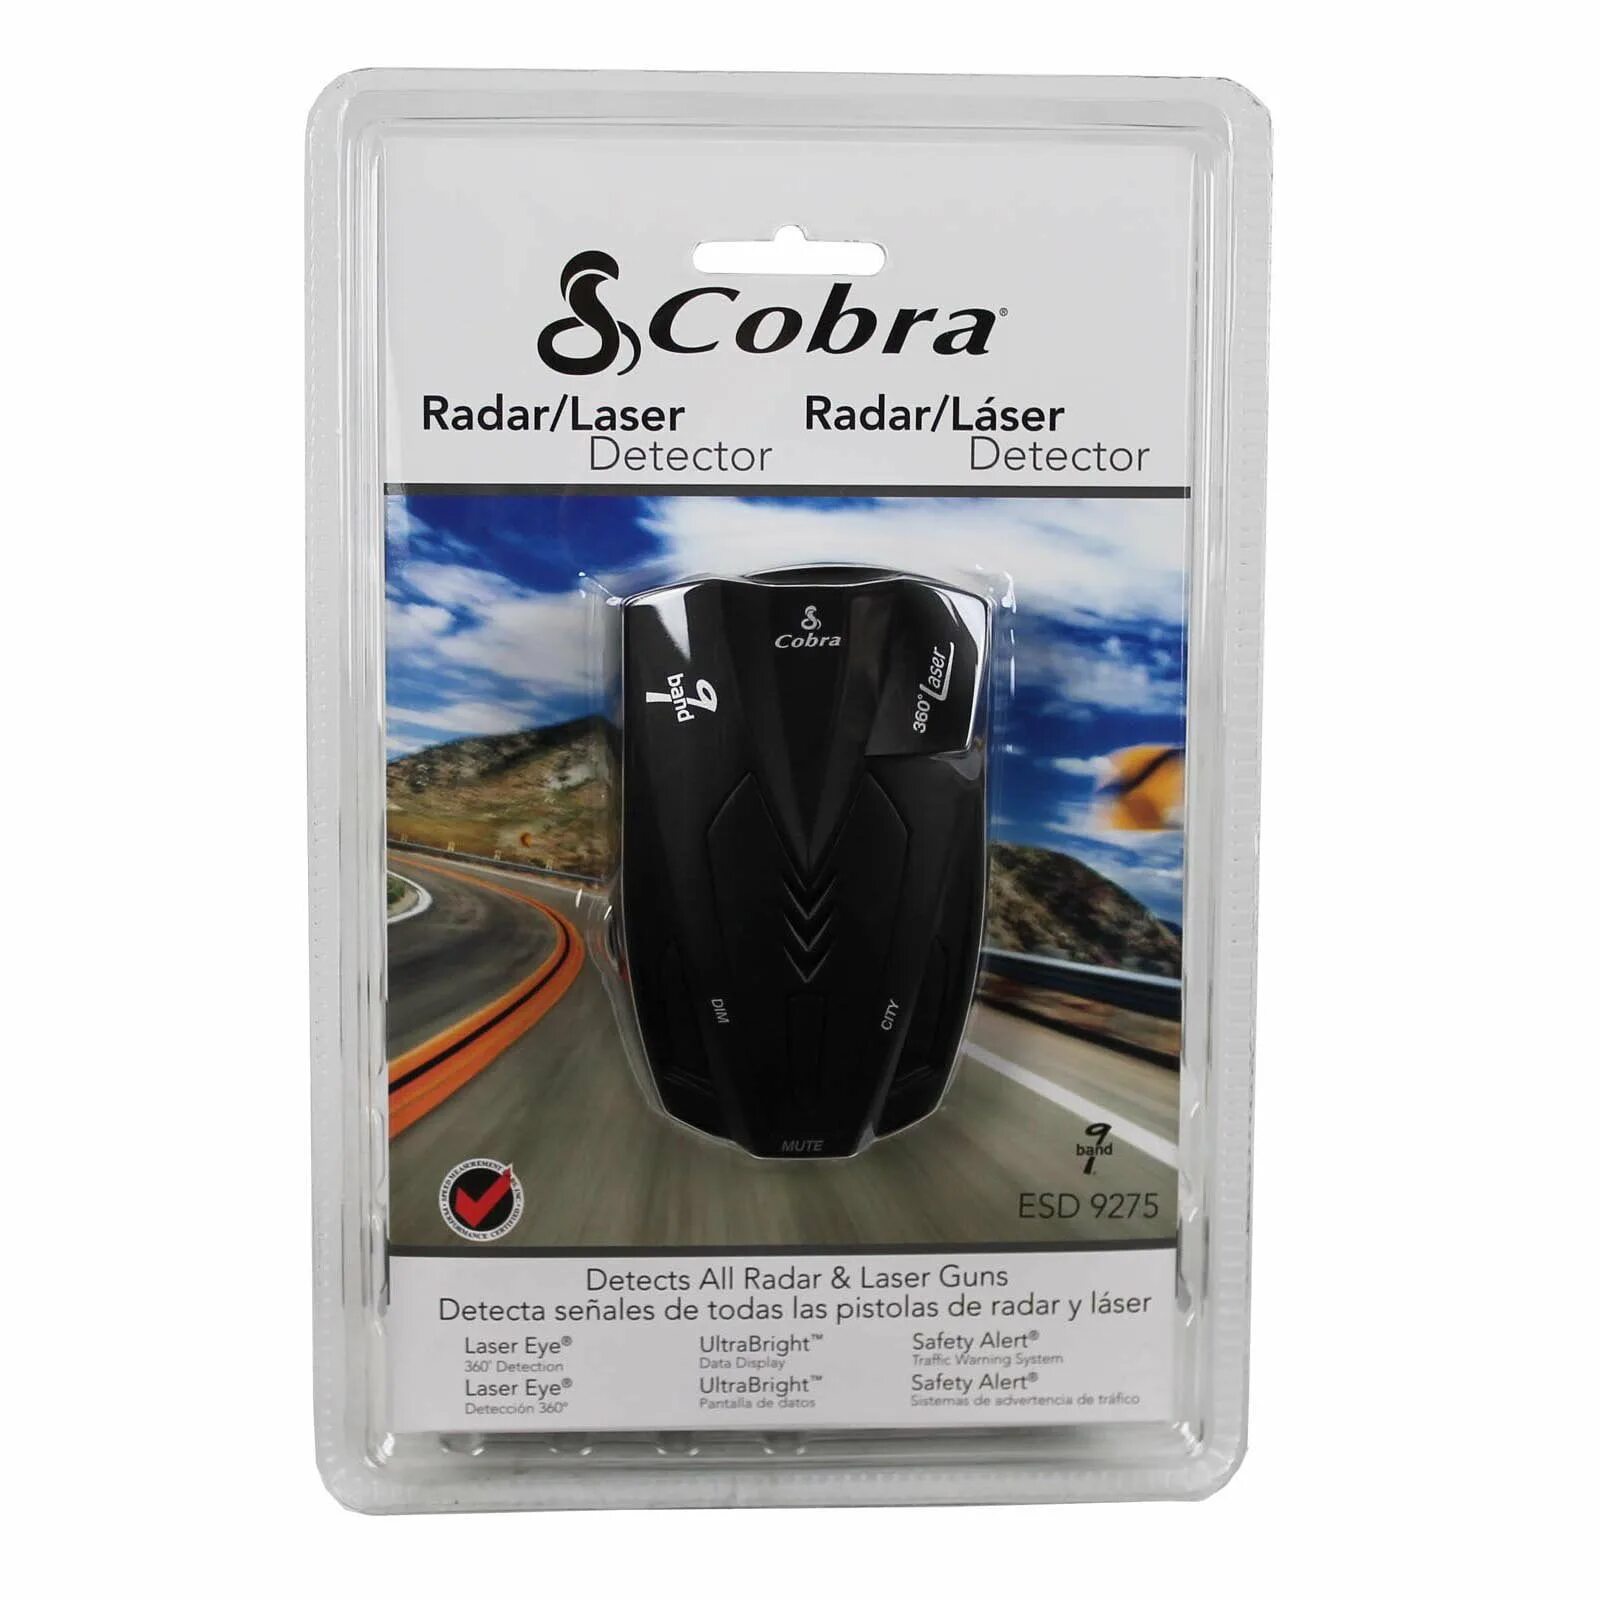 Настройка cobra. Антирадар Cobra 360. Радар детектор Cobra 5200. Радар детектор Кобра 360 лазер. &Cobra радар детектор Cobra с экраном.